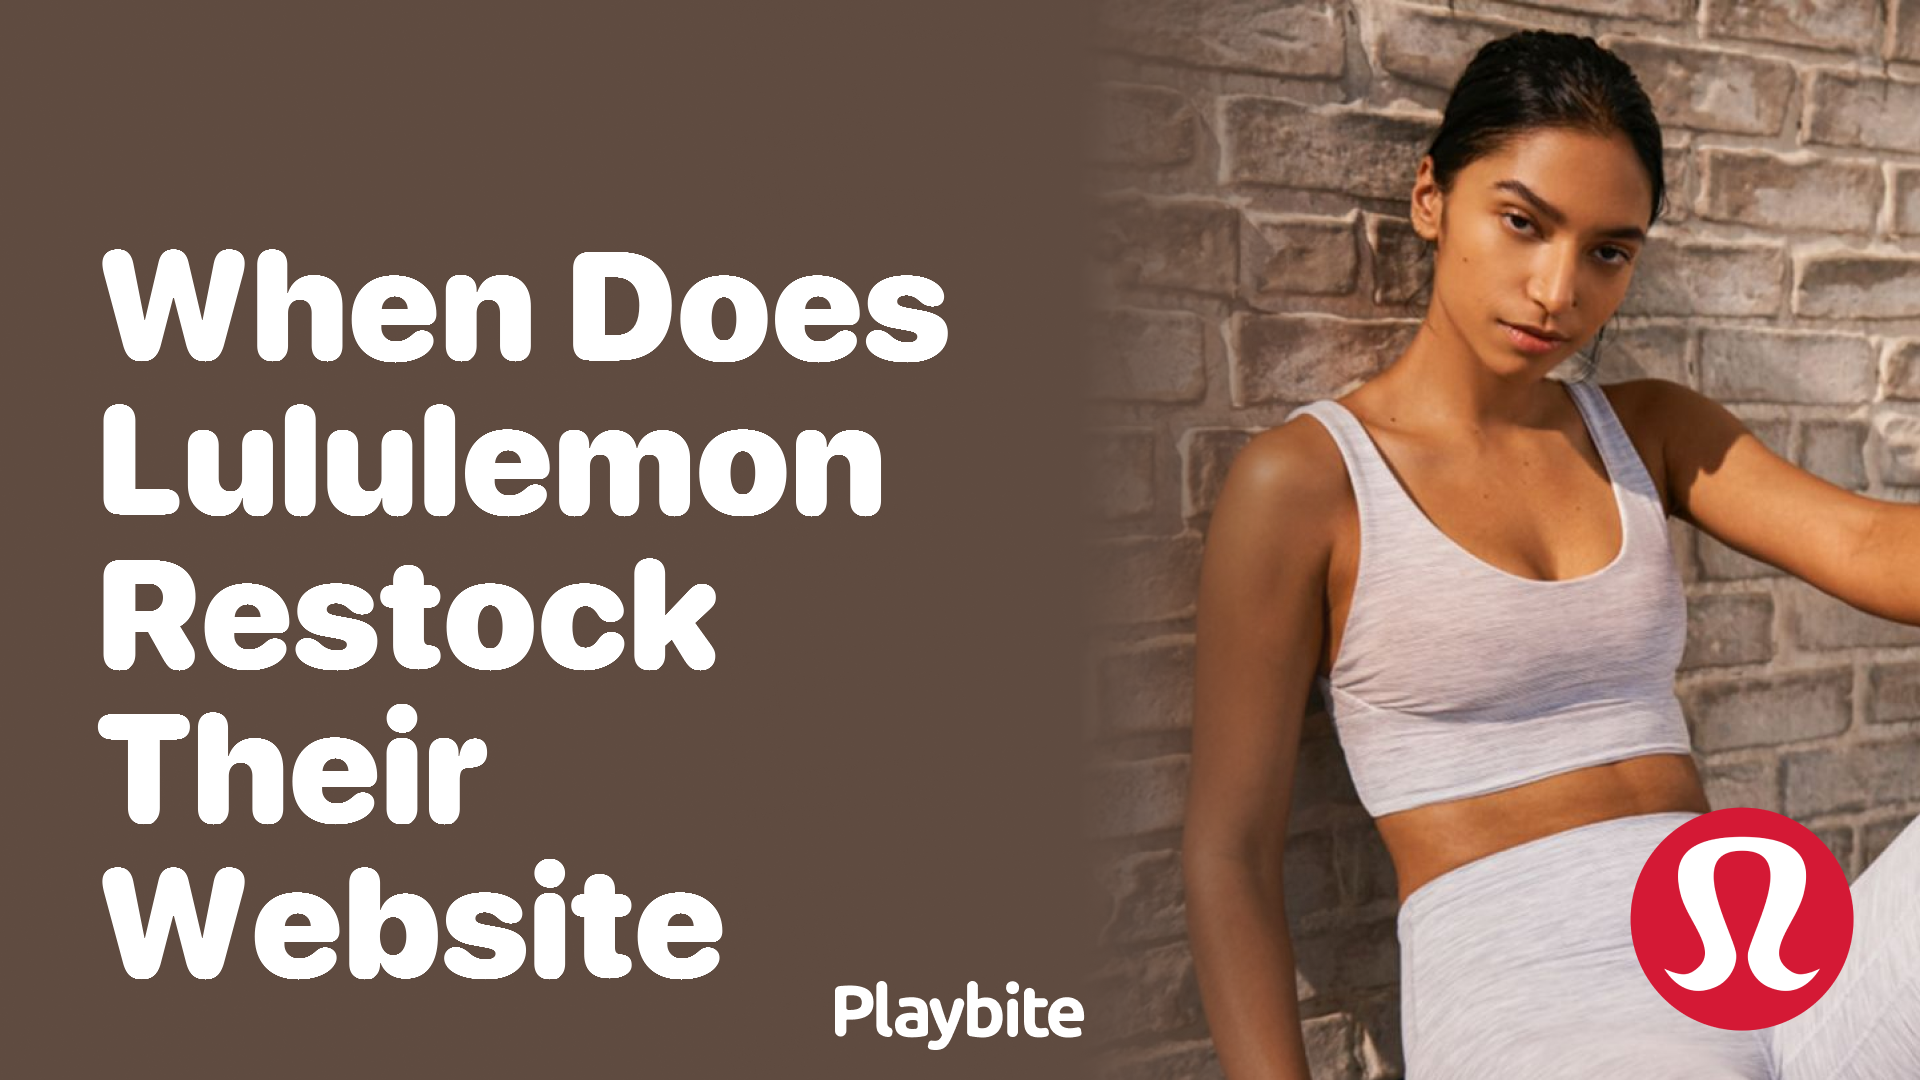 When Does Lululemon Restock Their Website? - Playbite